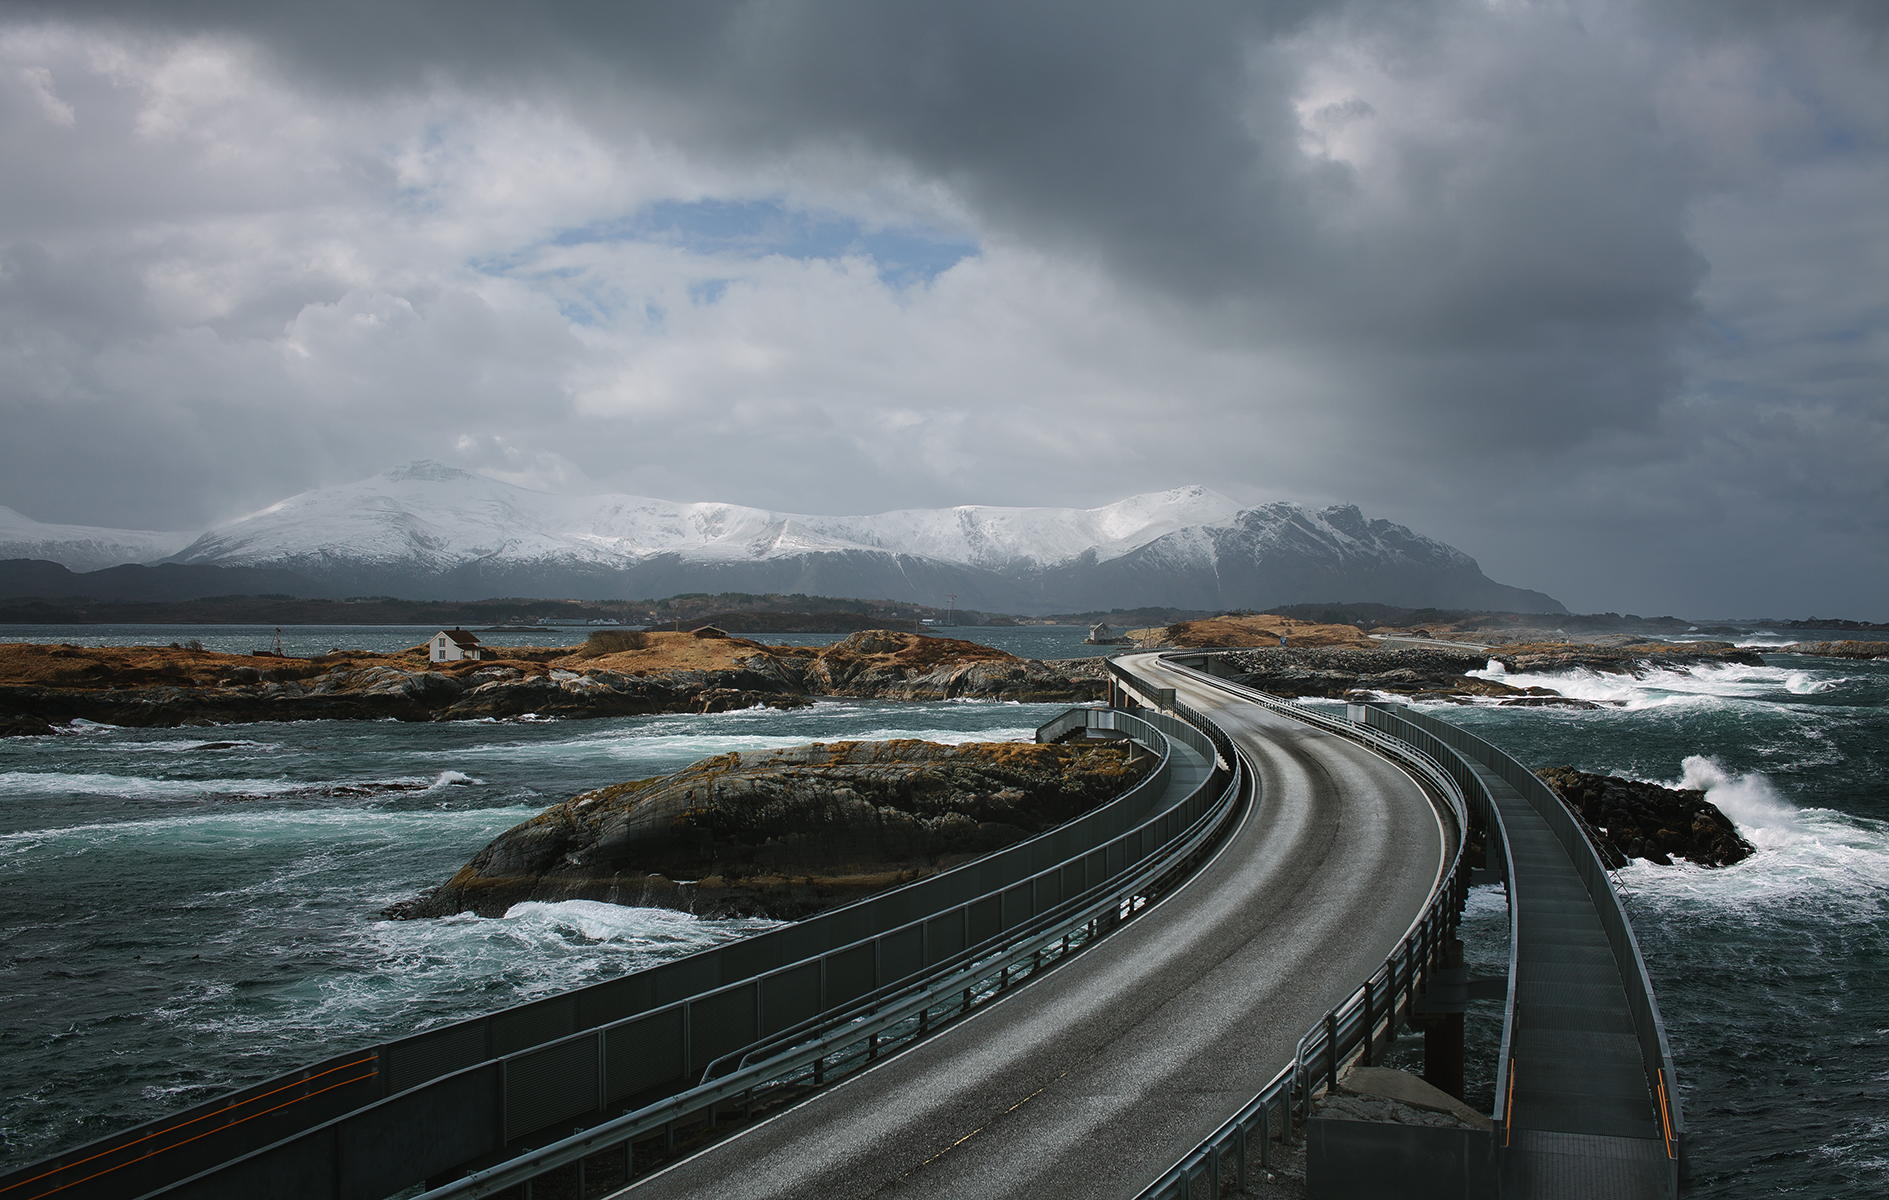 Атлантическая дорога. Дорога Атлантик роуд Норвегия. Мост Storseisundet, Норвегия. Дорога Атлантик роуд Норвегия мосты. Трансатлантическая дорога в Норвегии.